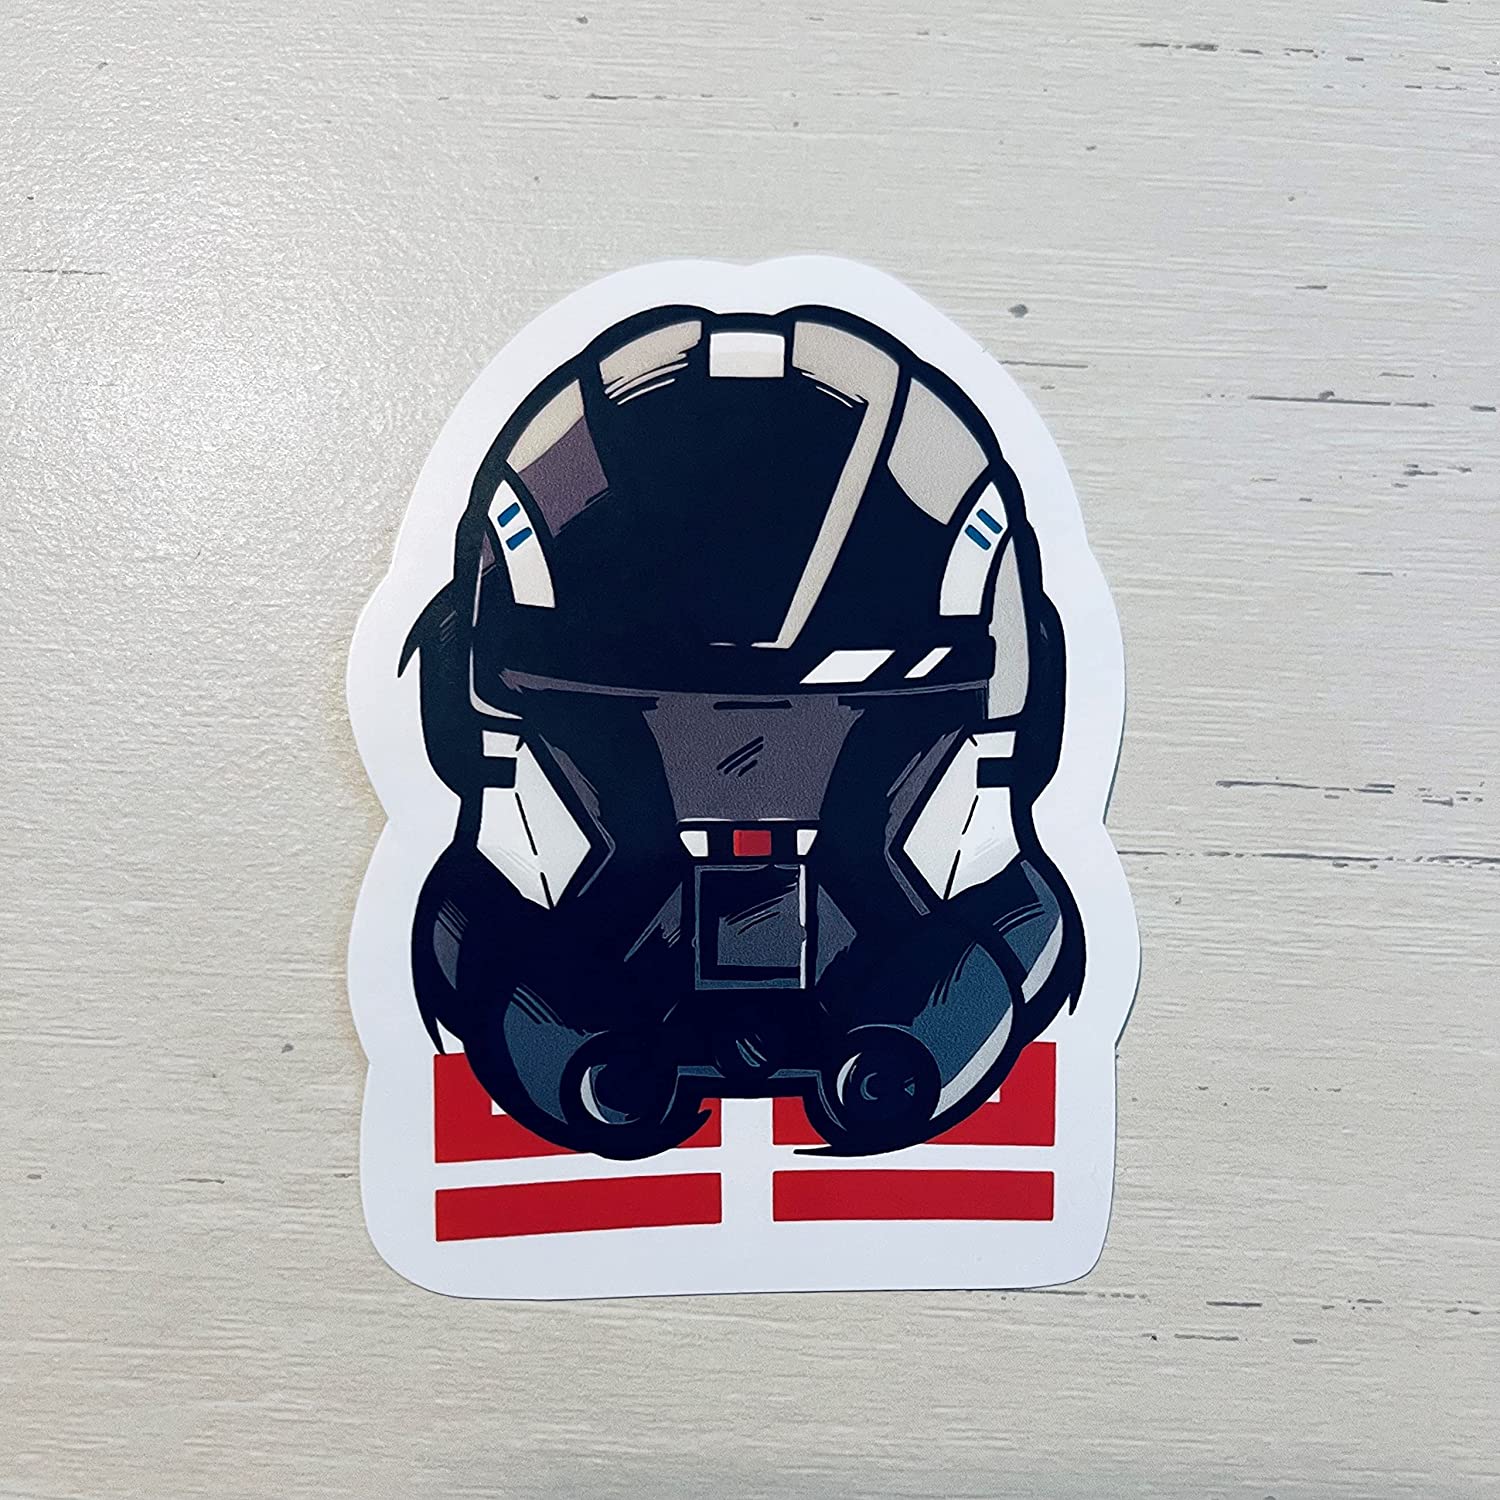 SWTBB Echo's Helmet Laptop Sticker